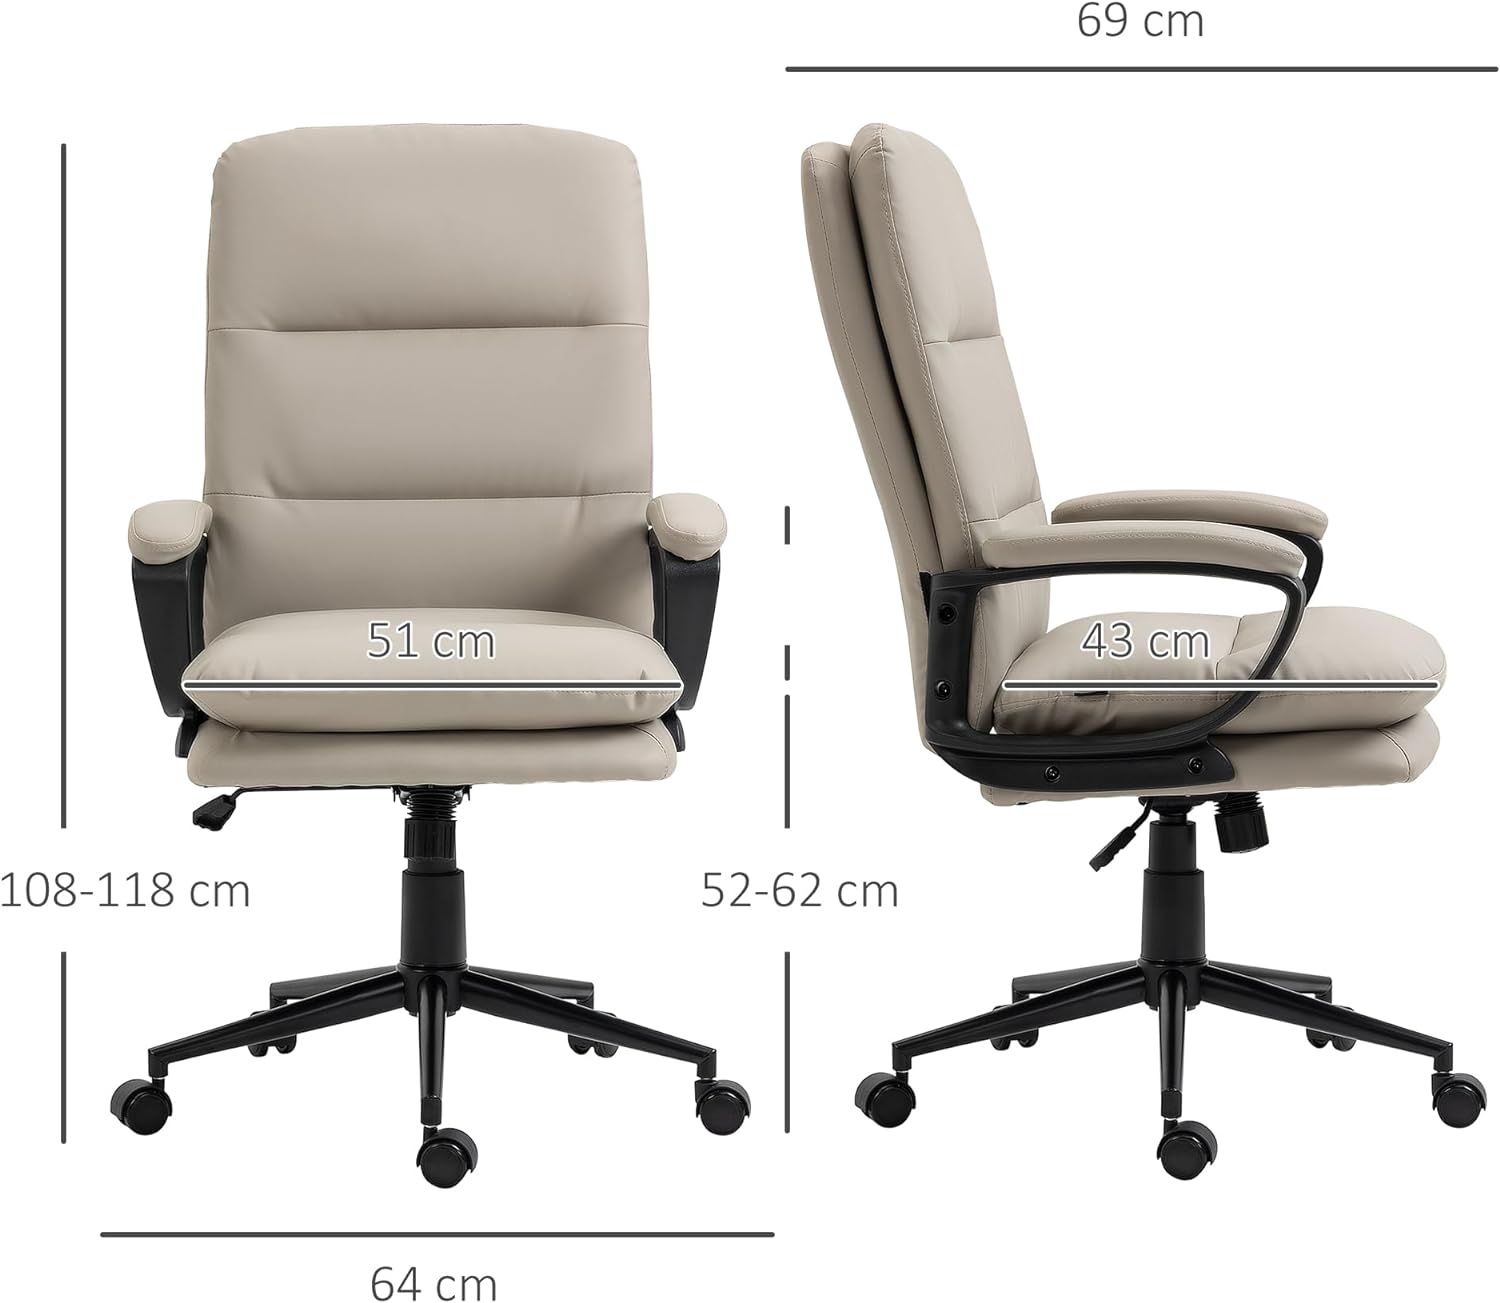 ProperAV Extra PU Leather Ergonomic Adjustable Office Chair - Light Grey - maplin.co.uk